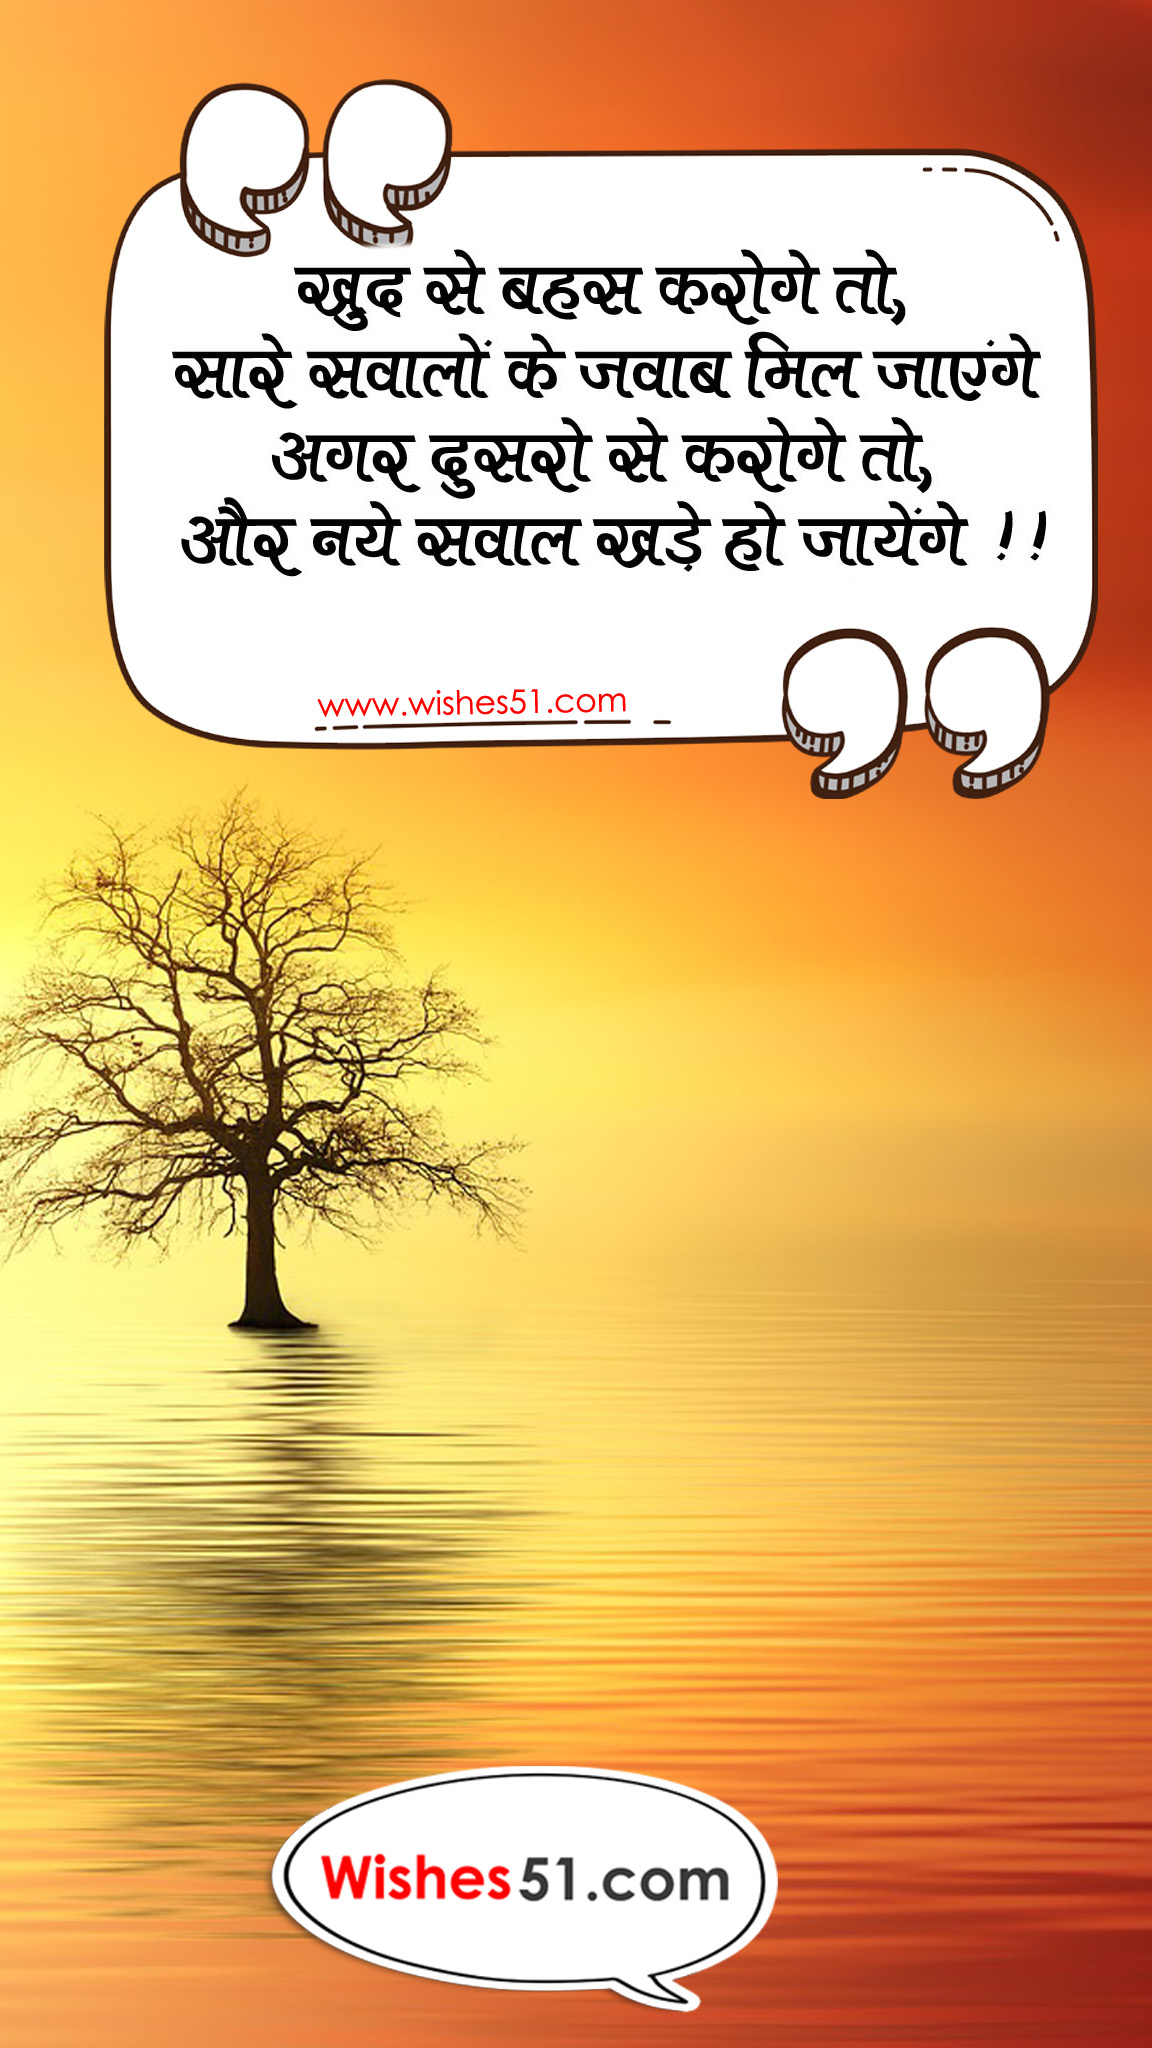 whatsapp video free download hindi